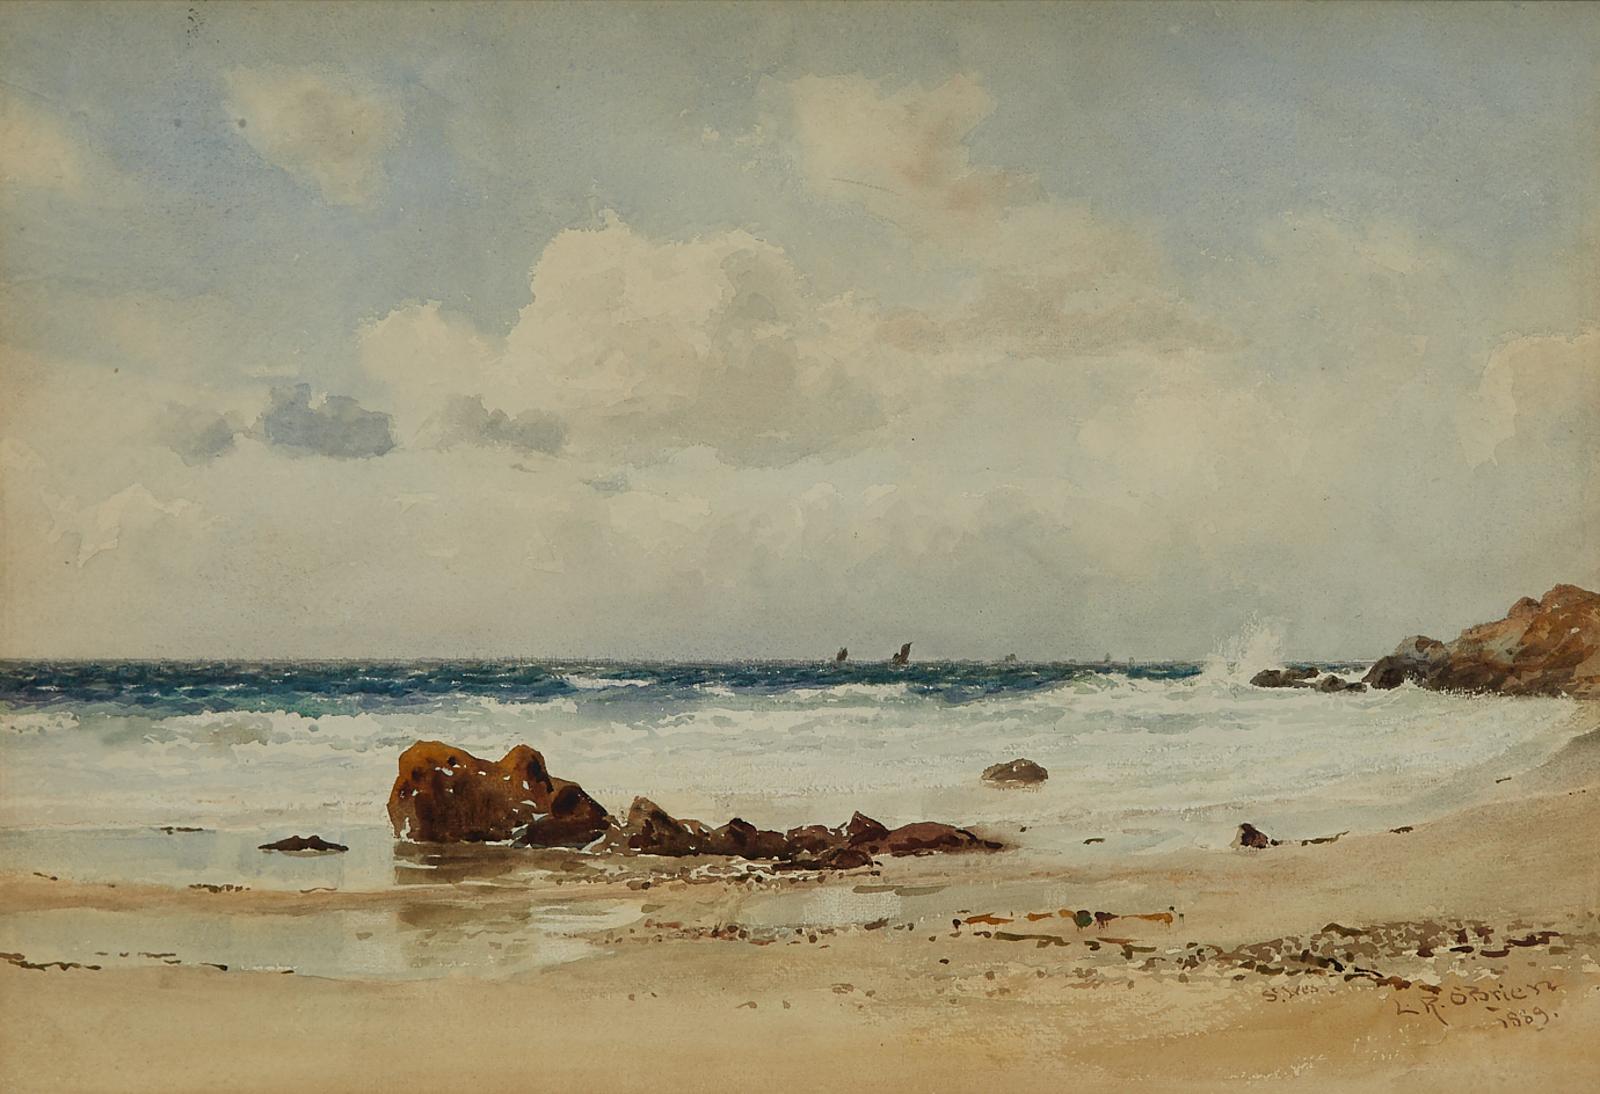 Lucius Richard O'Brien (1832-1899) - Irish Channel Off St. Ives, 1889